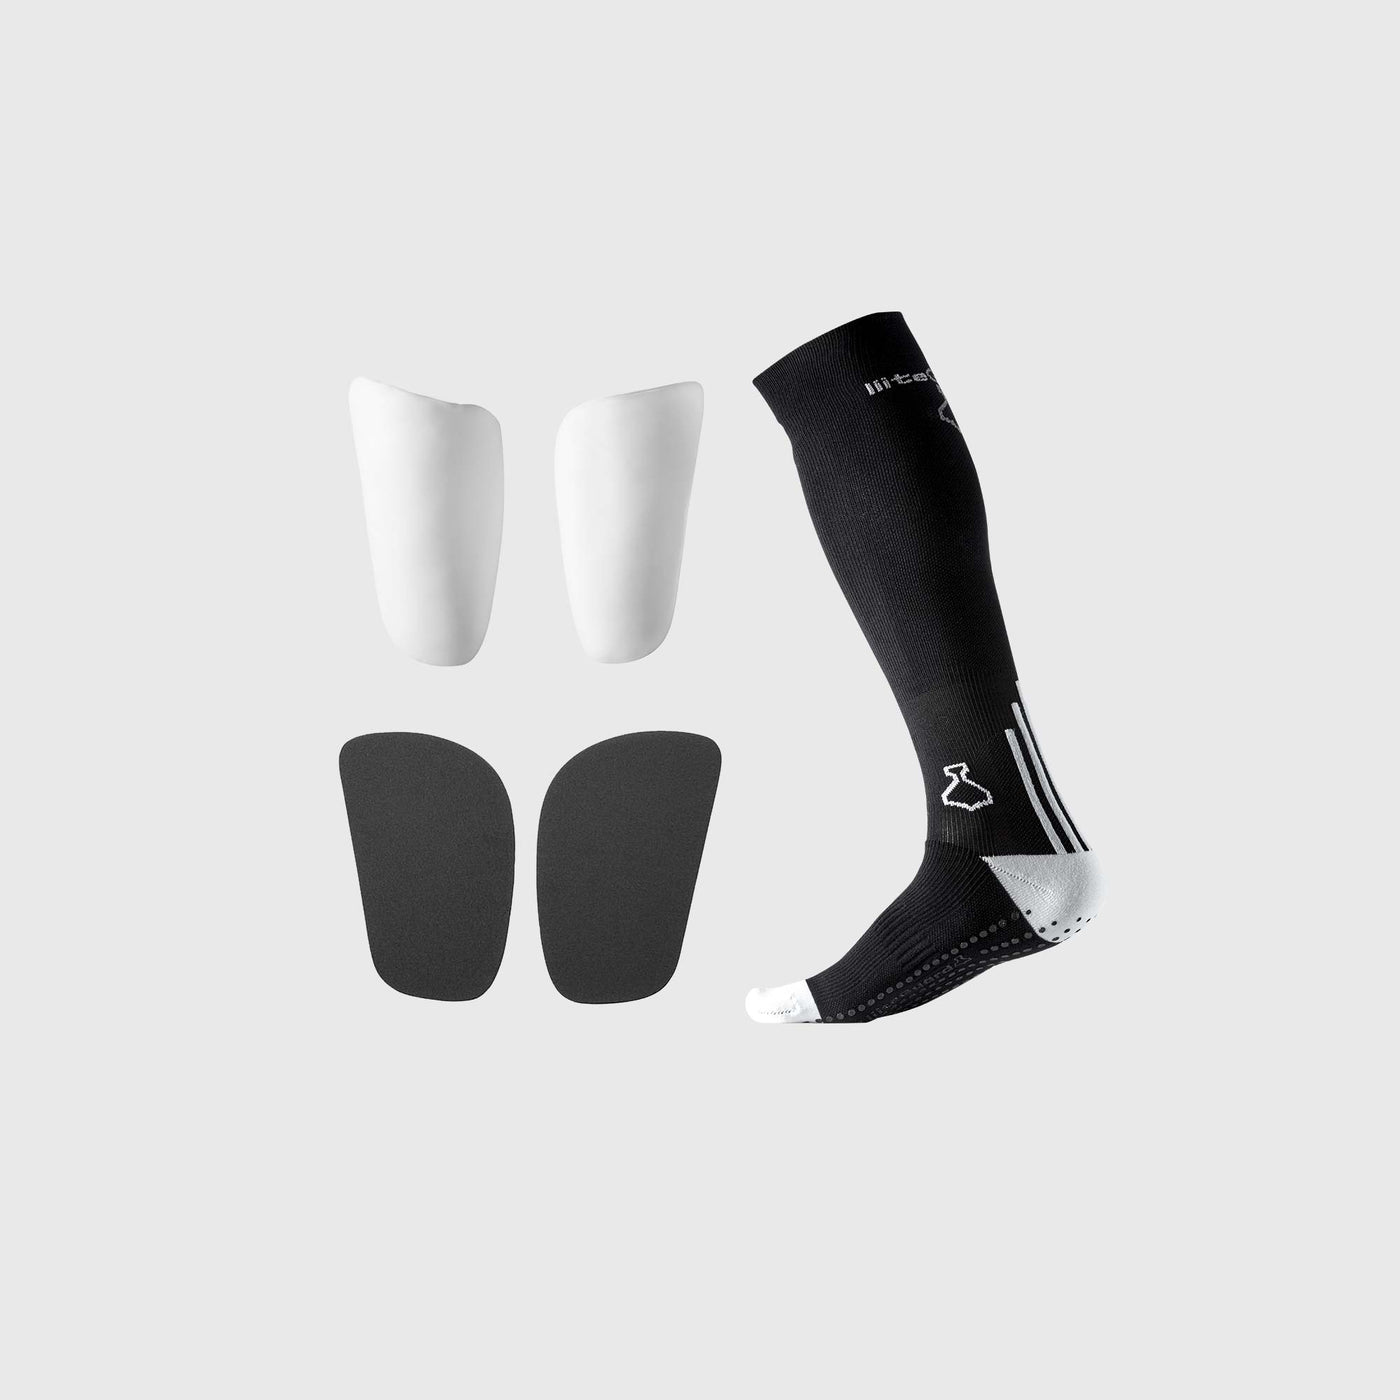 Liiteguard PERFORMANCE KIT Long socks BLACK